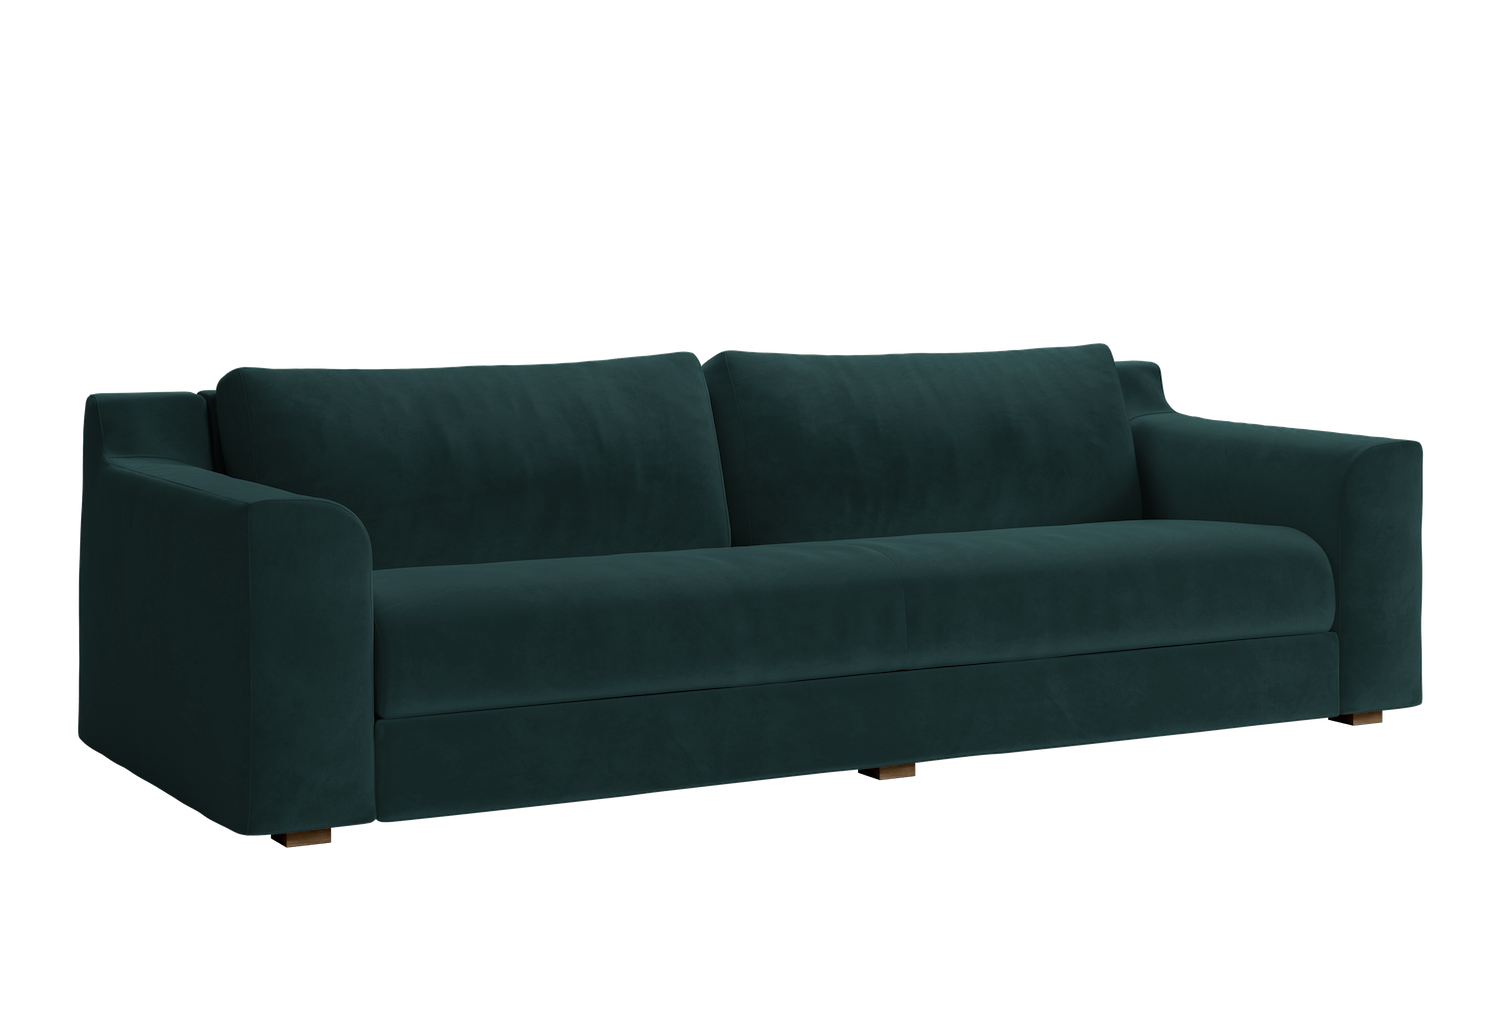 The Elevate Sofa in Recycled Velvet